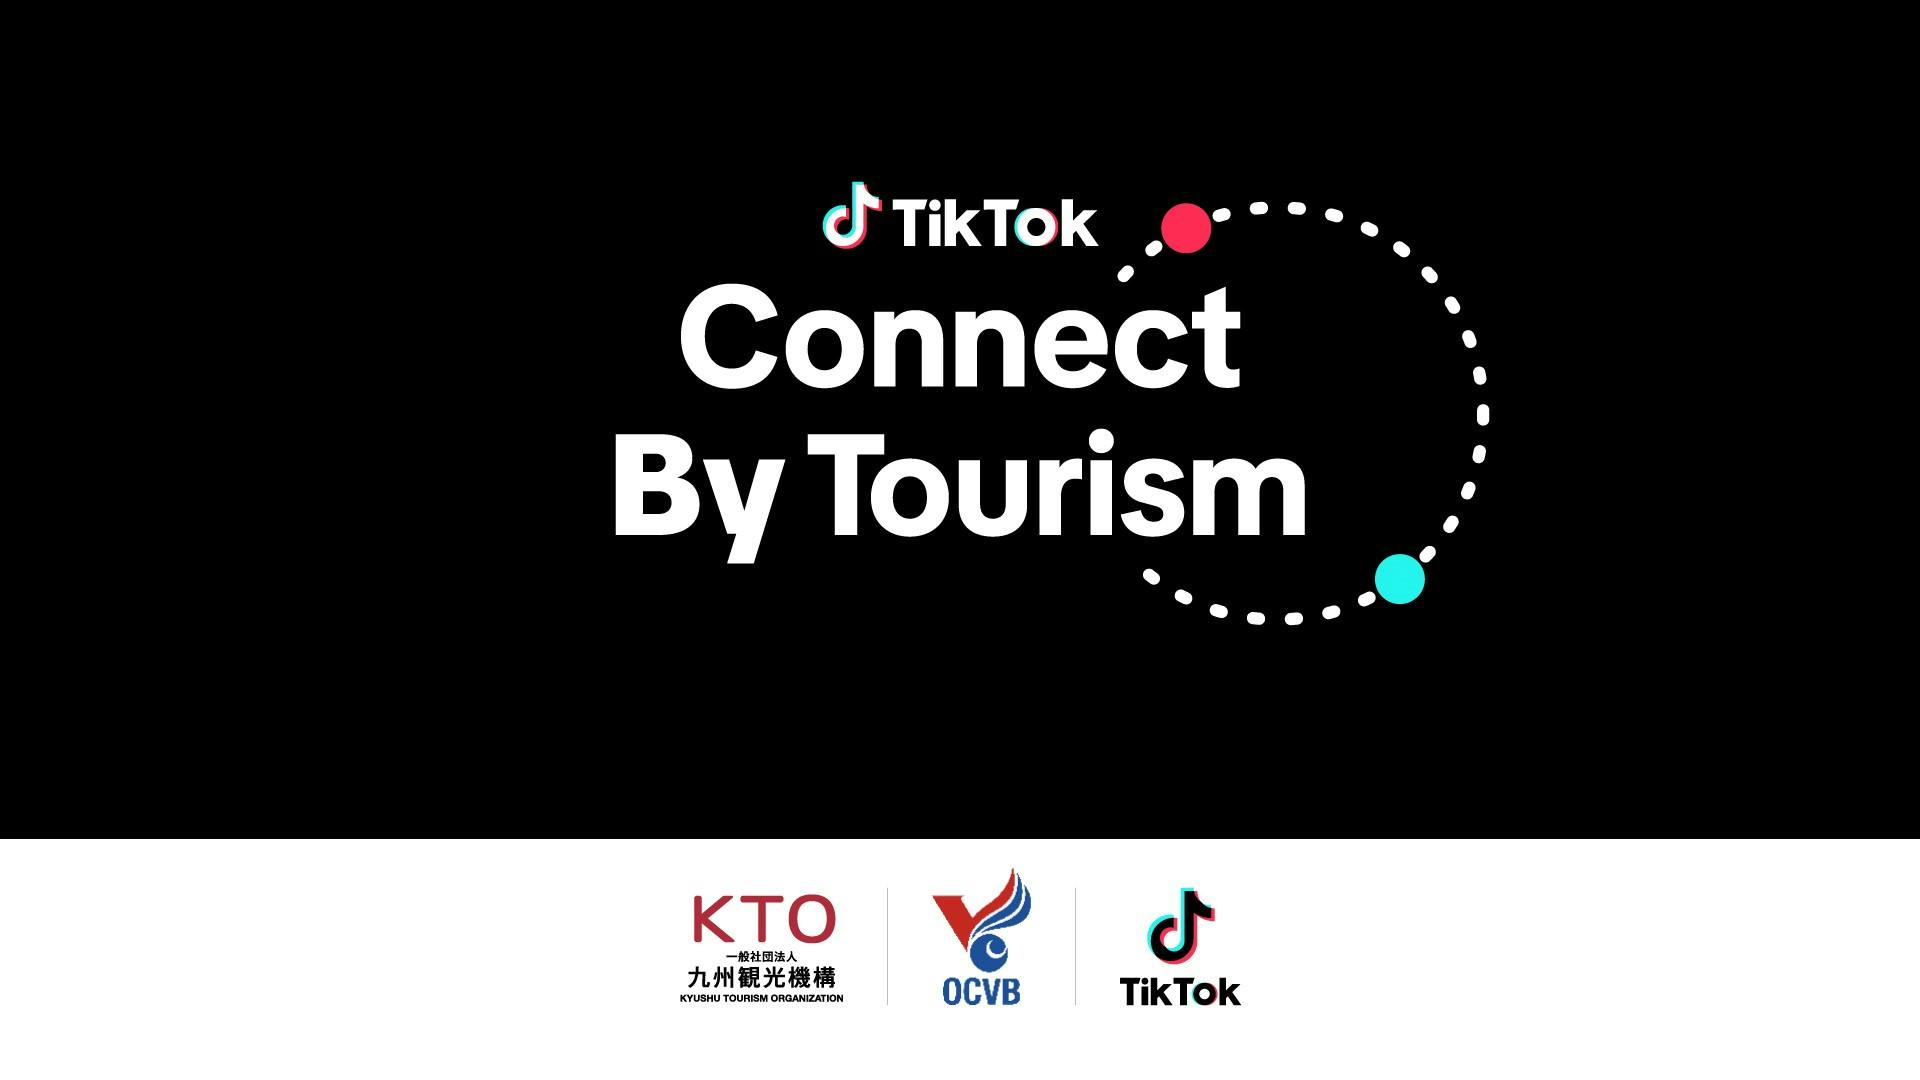 TikTok、日本・韓国・台湾の人気クリエイターを九州・沖縄に招いて地元の観光産業を支援するプロジェクト「TikTok Connect By Tourism」を実施！